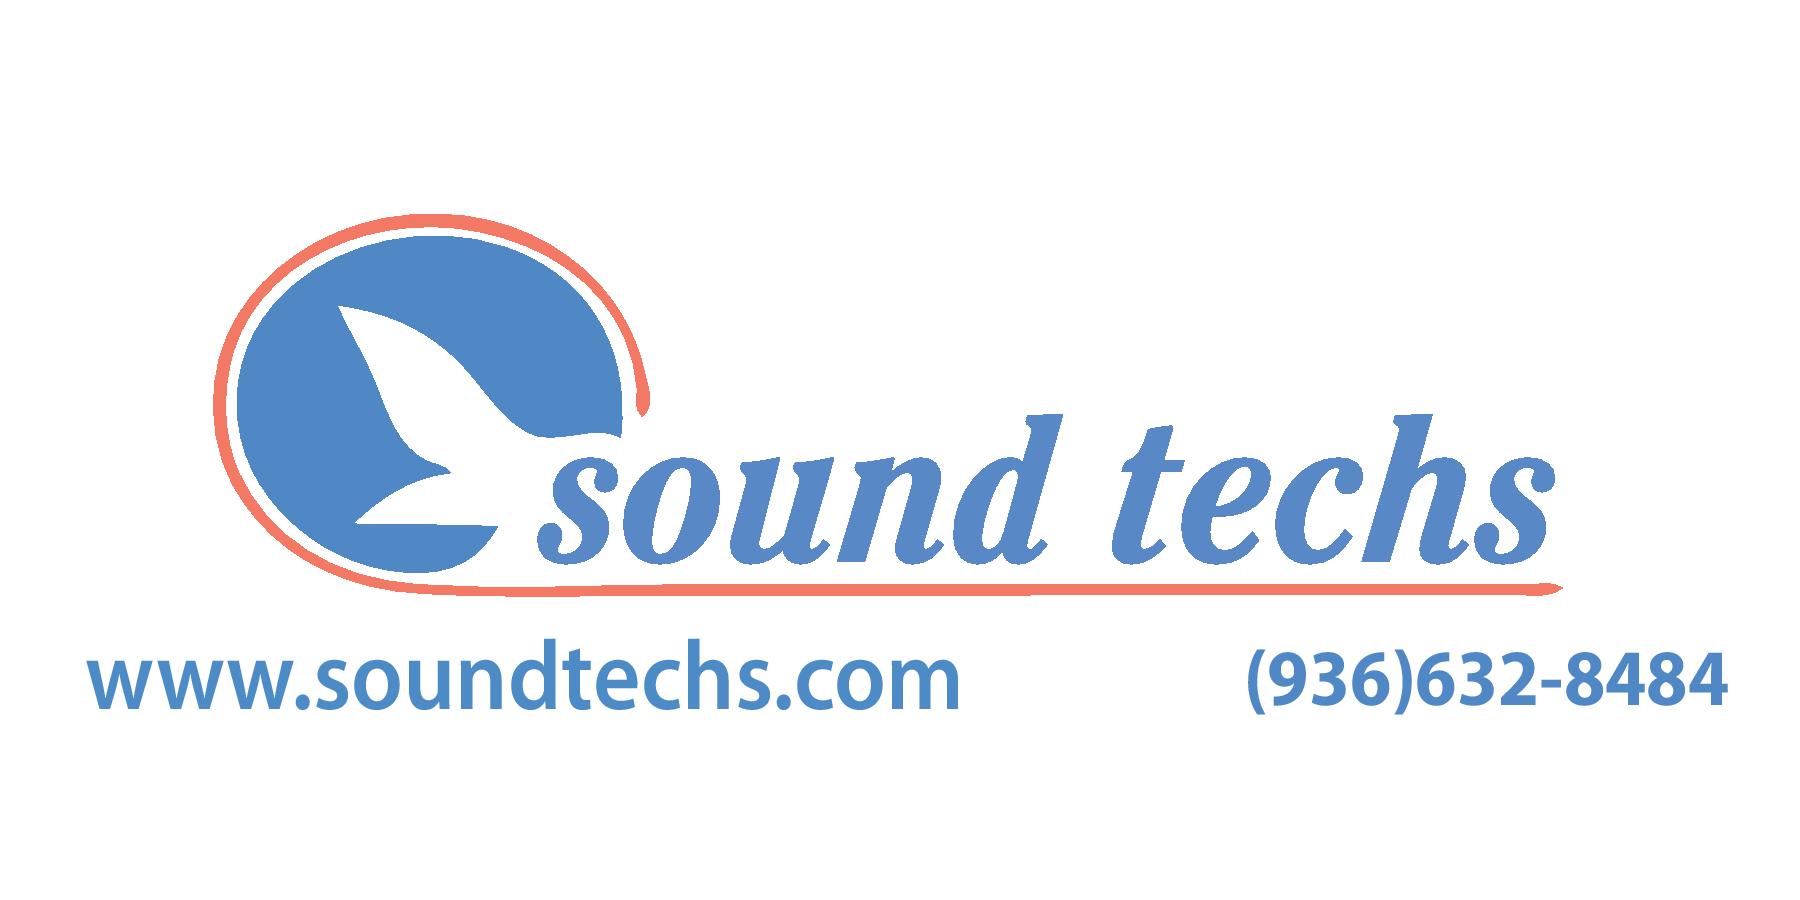 6366Sounds_Tech_logo-page-001